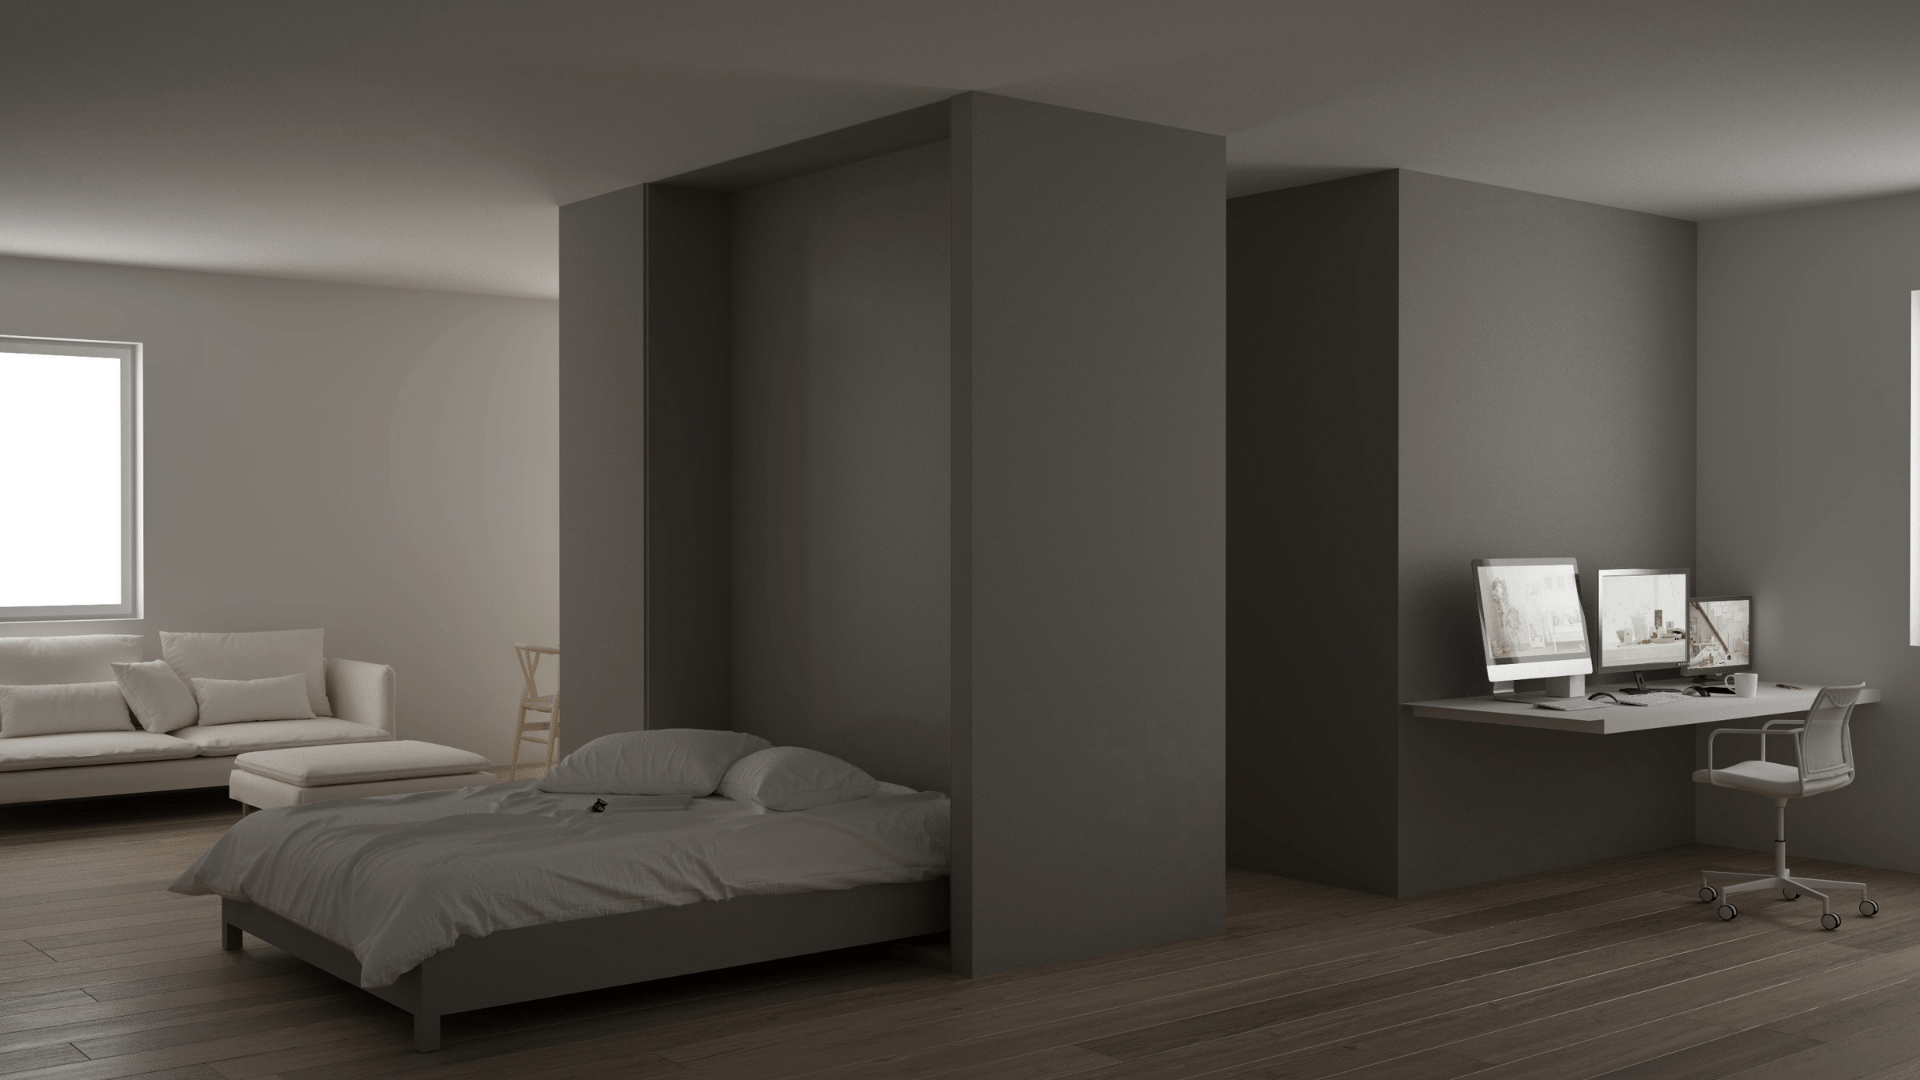 condo design _ space saving murphy bed